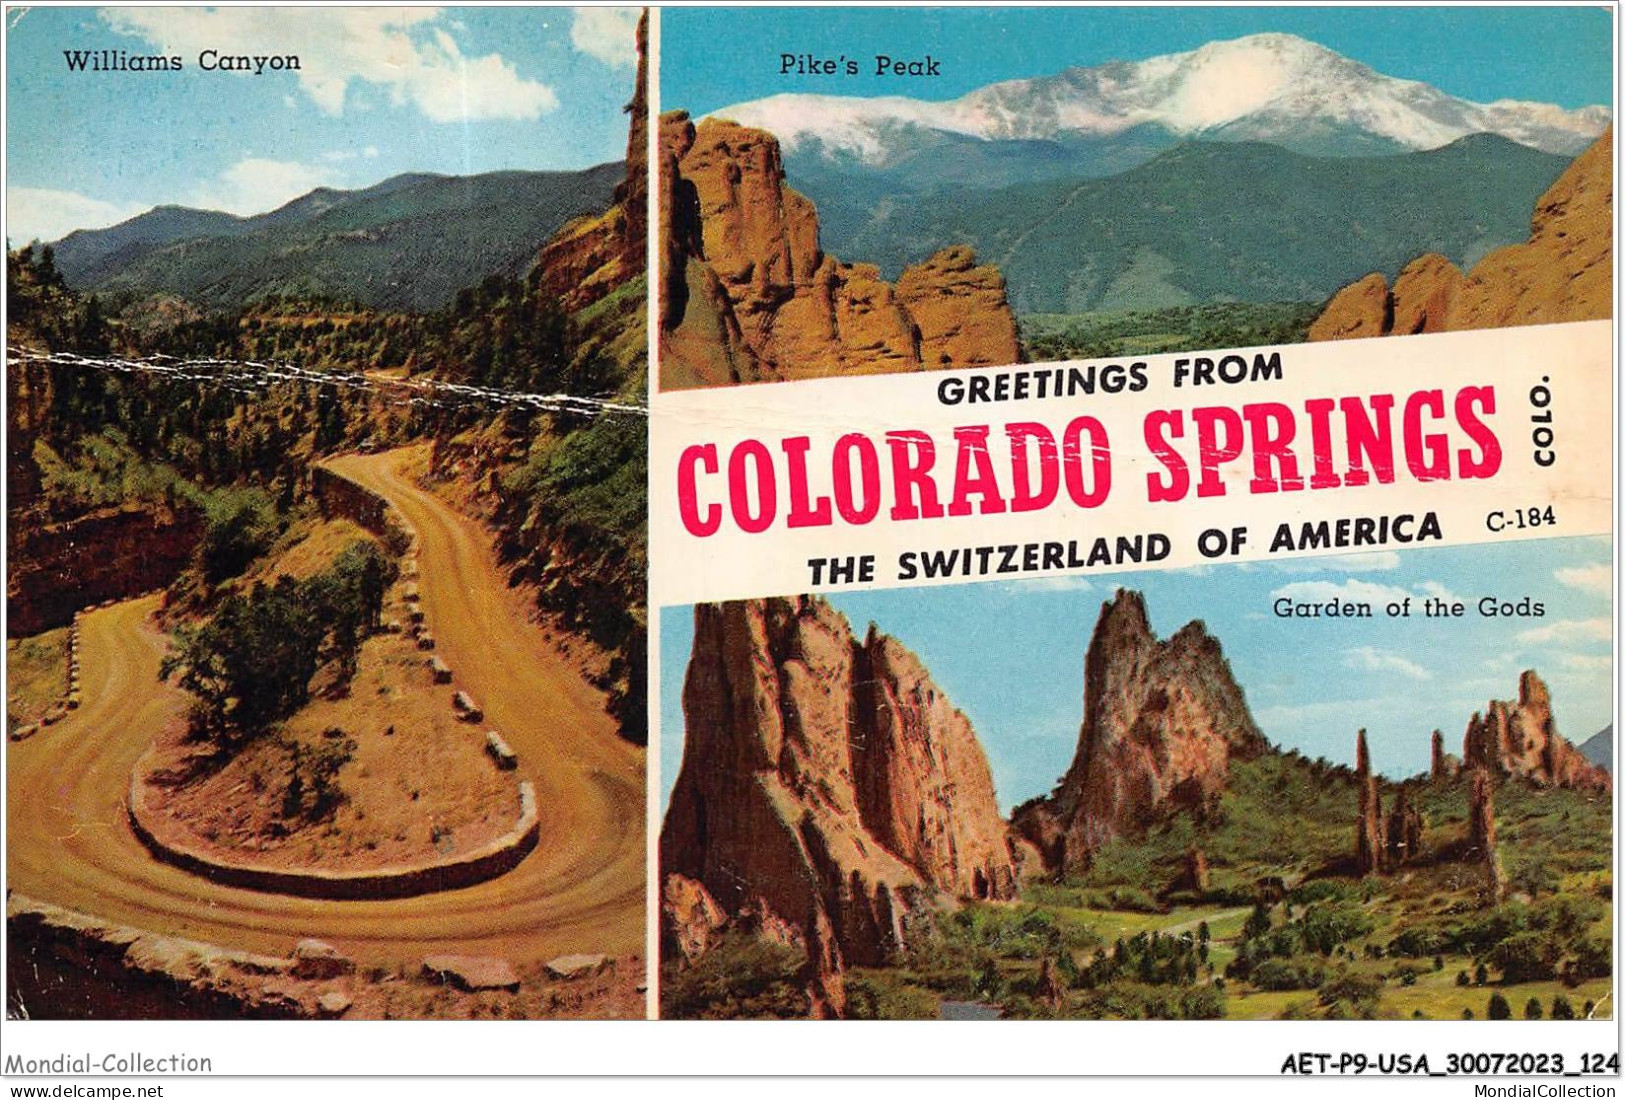 AETP9-USA-0751 - COLORADO SPRINGS - Williams Canyon - Pike's Peak - Garden Of The Gods - Colorado Springs